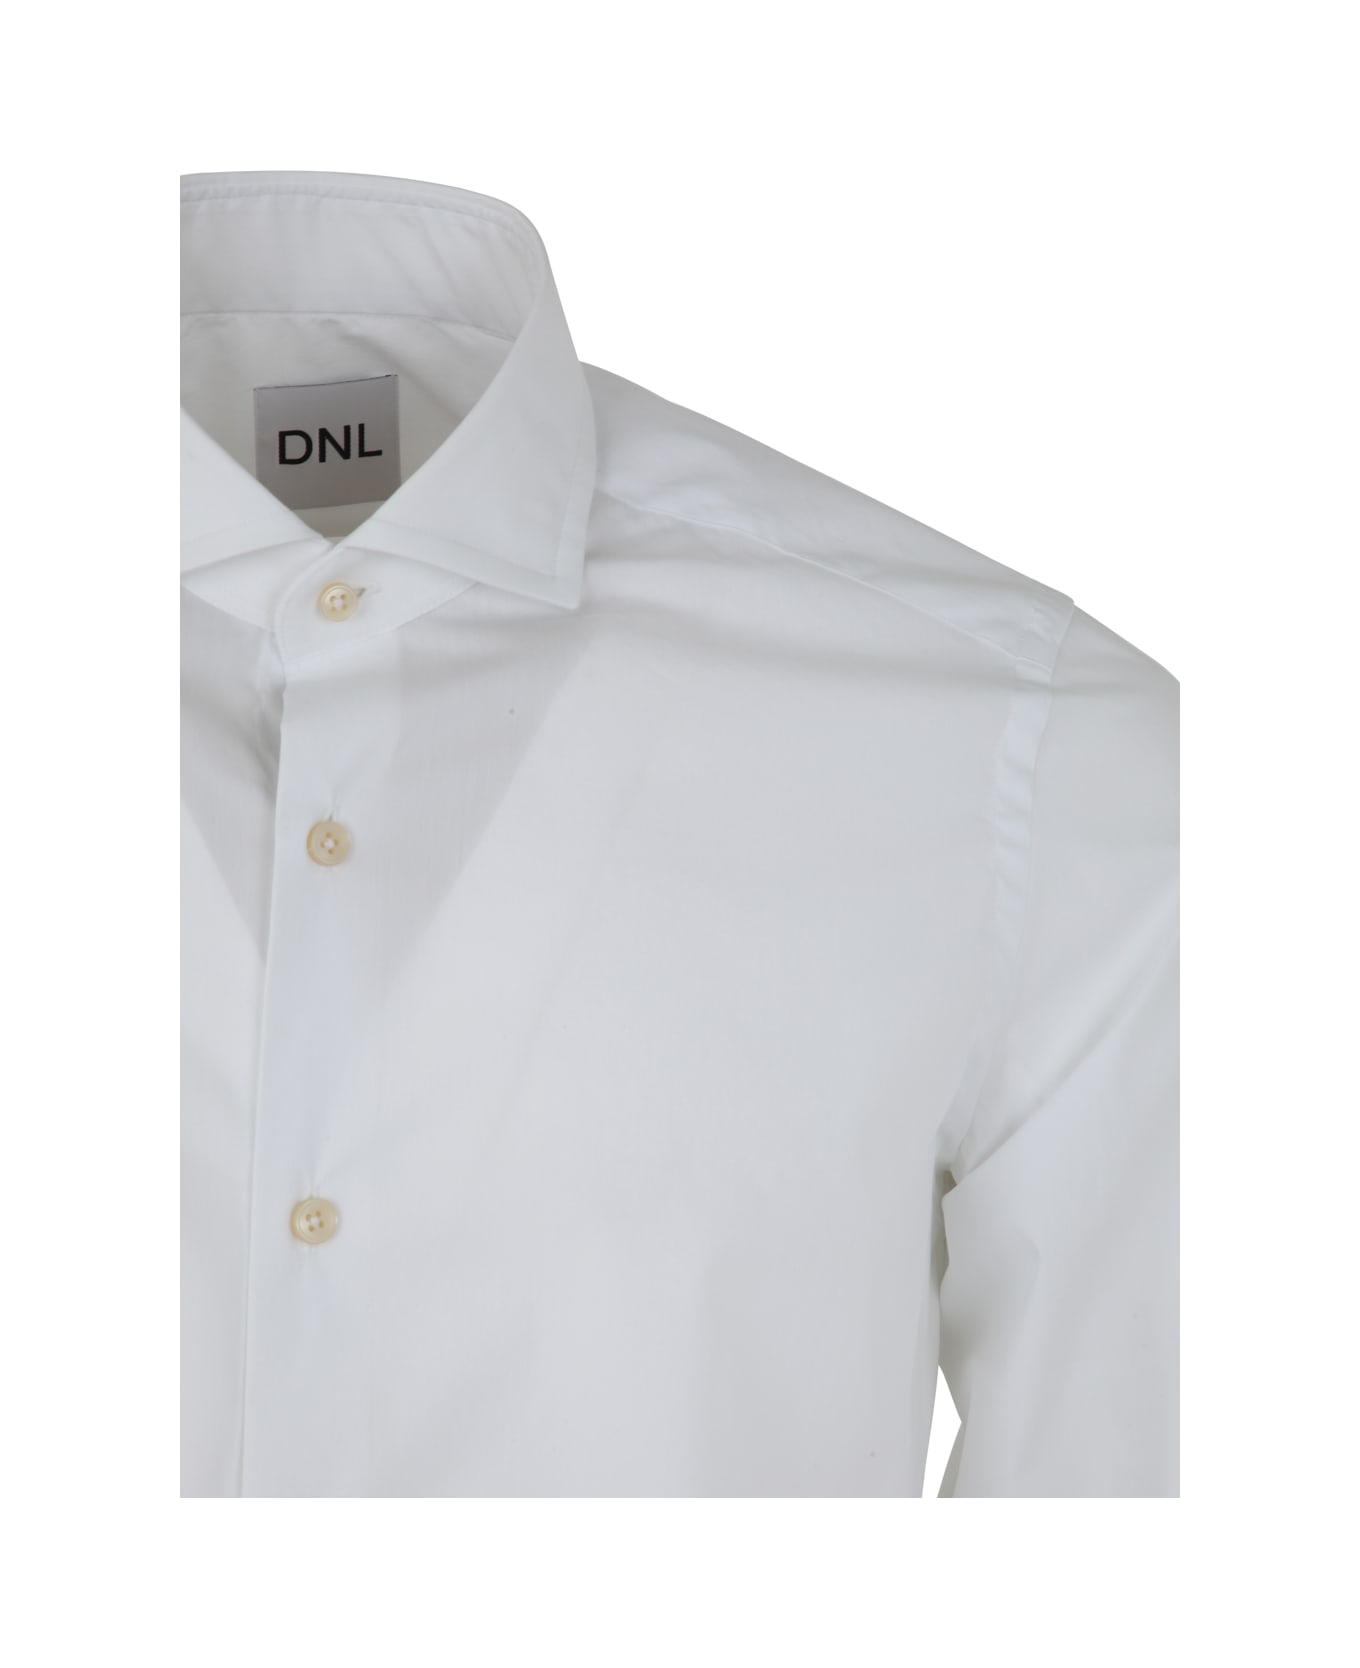 DNL Slim Shirt - White